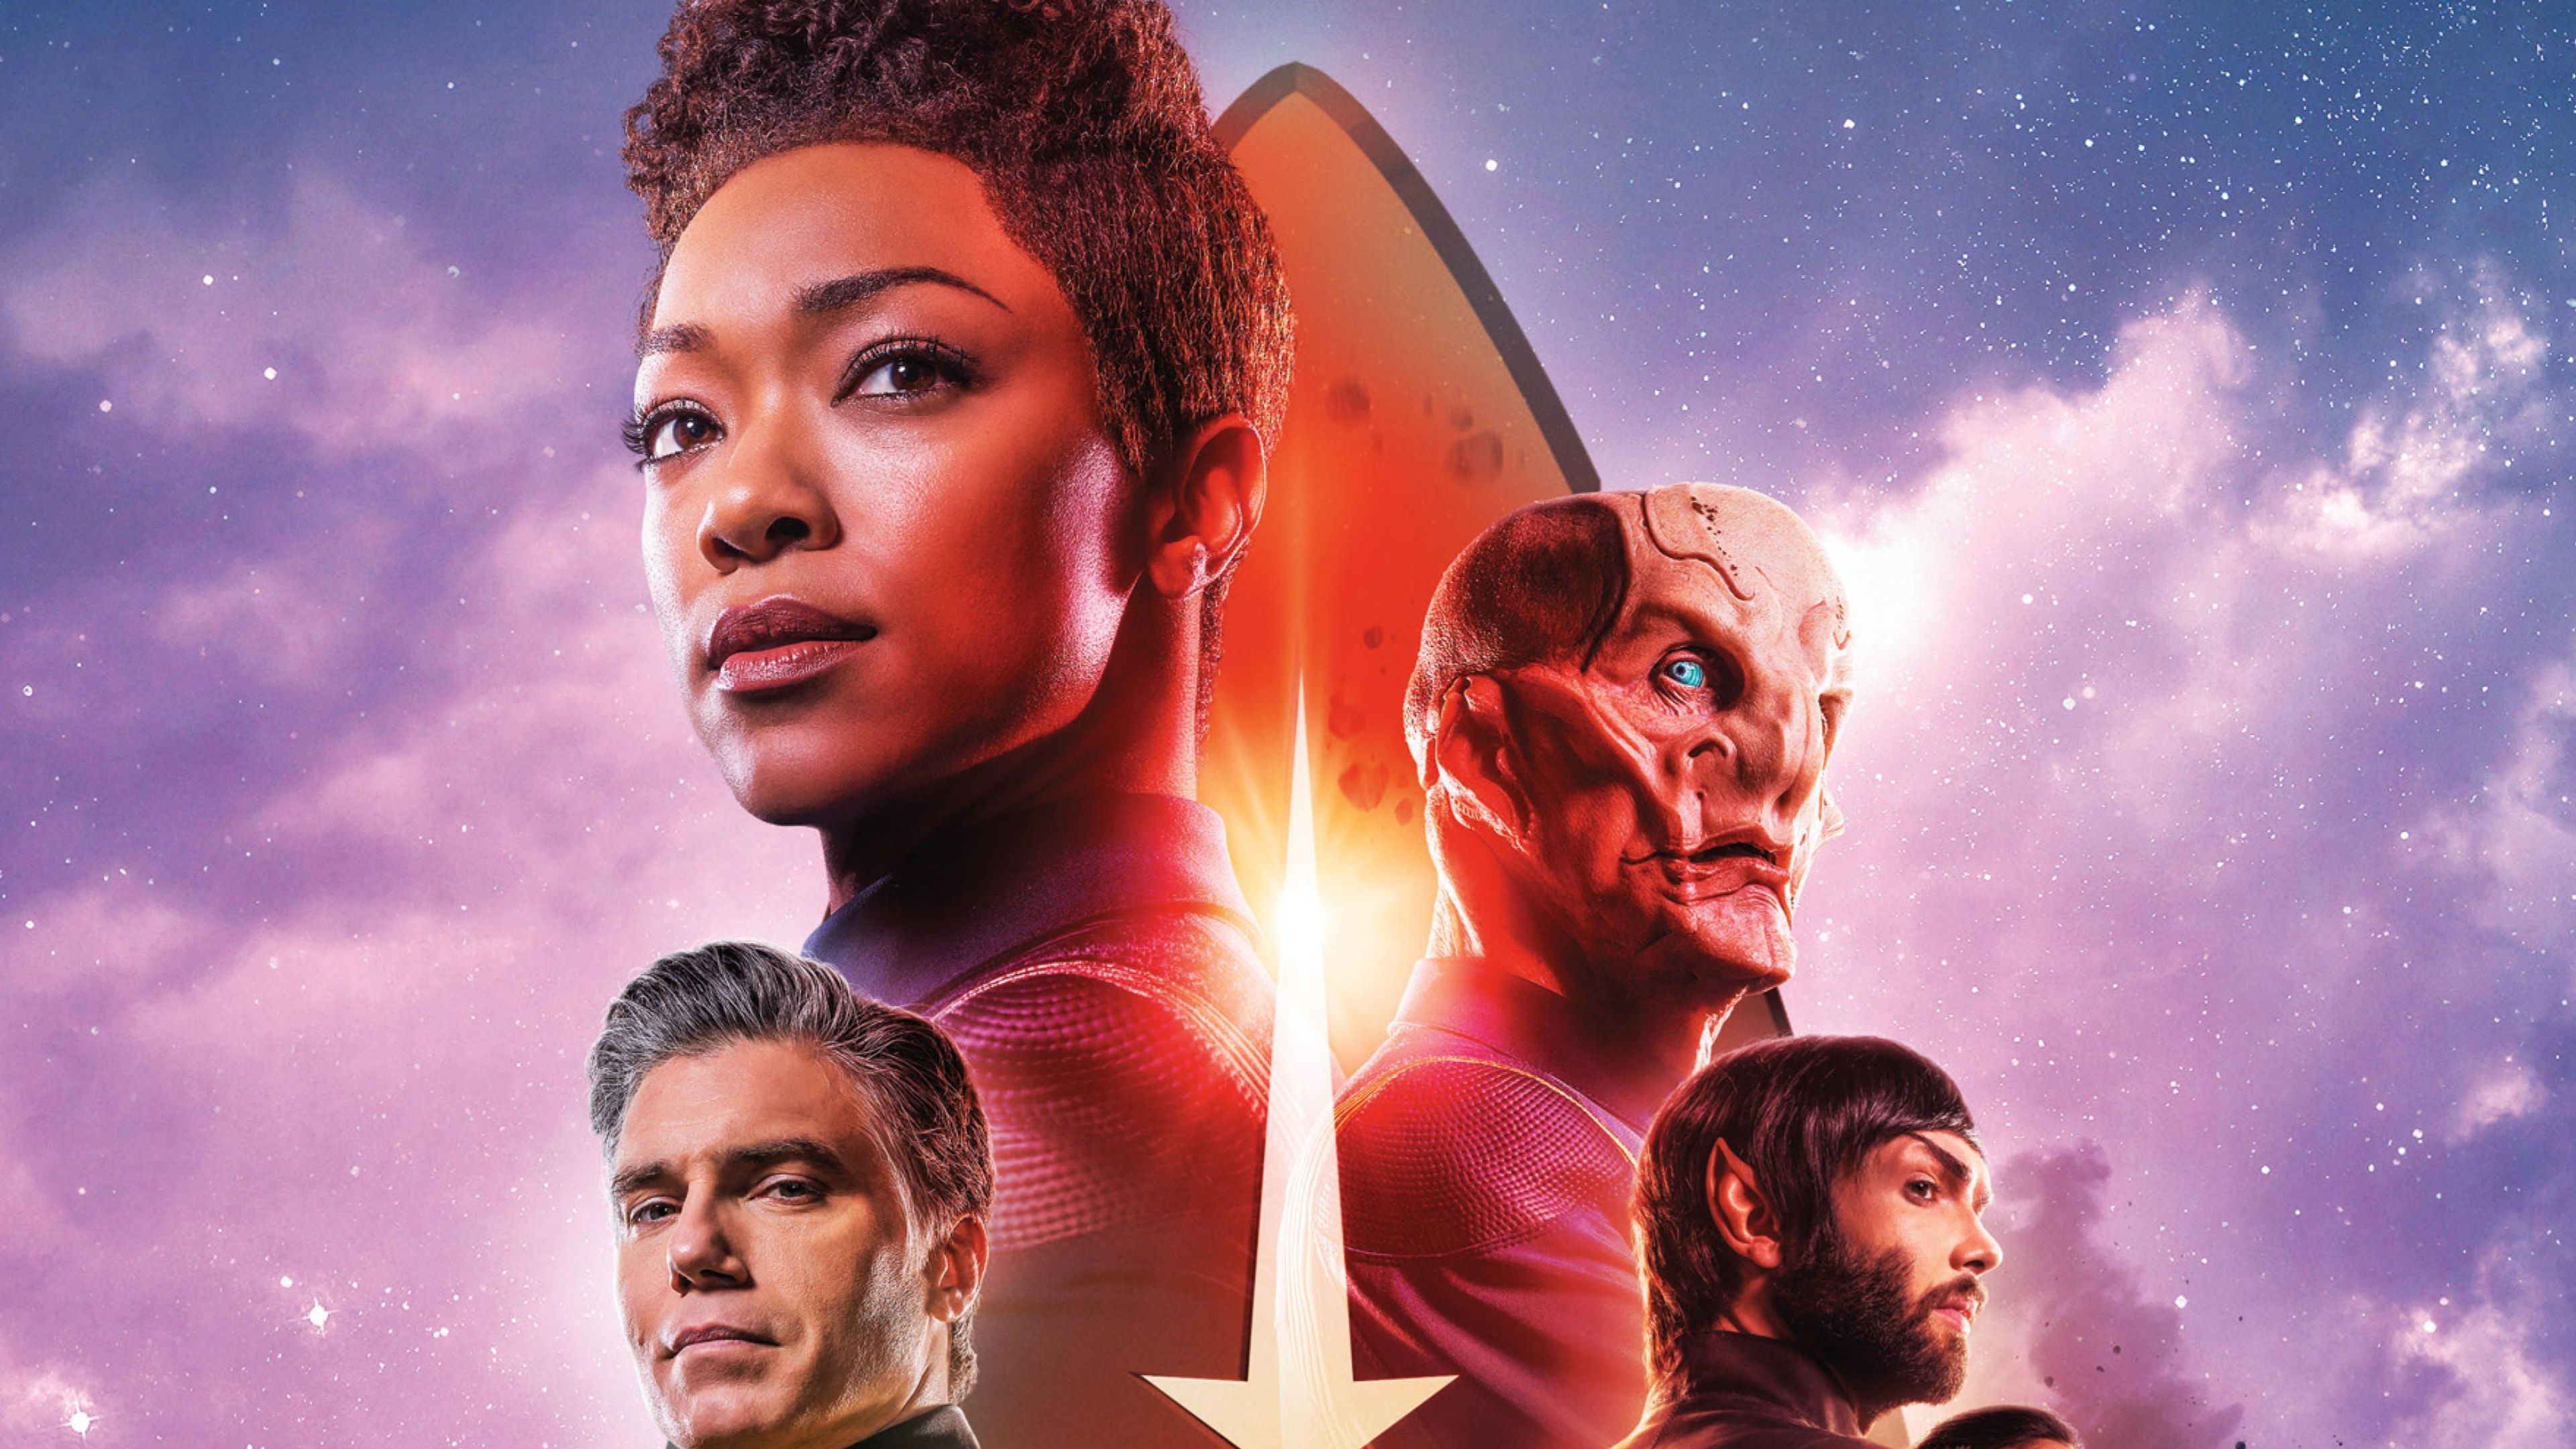 Star Trek Discovery Season 2 Poster 4K Wallpaper, HD TV Series 4K Wallpaper, Image, Photo and Background